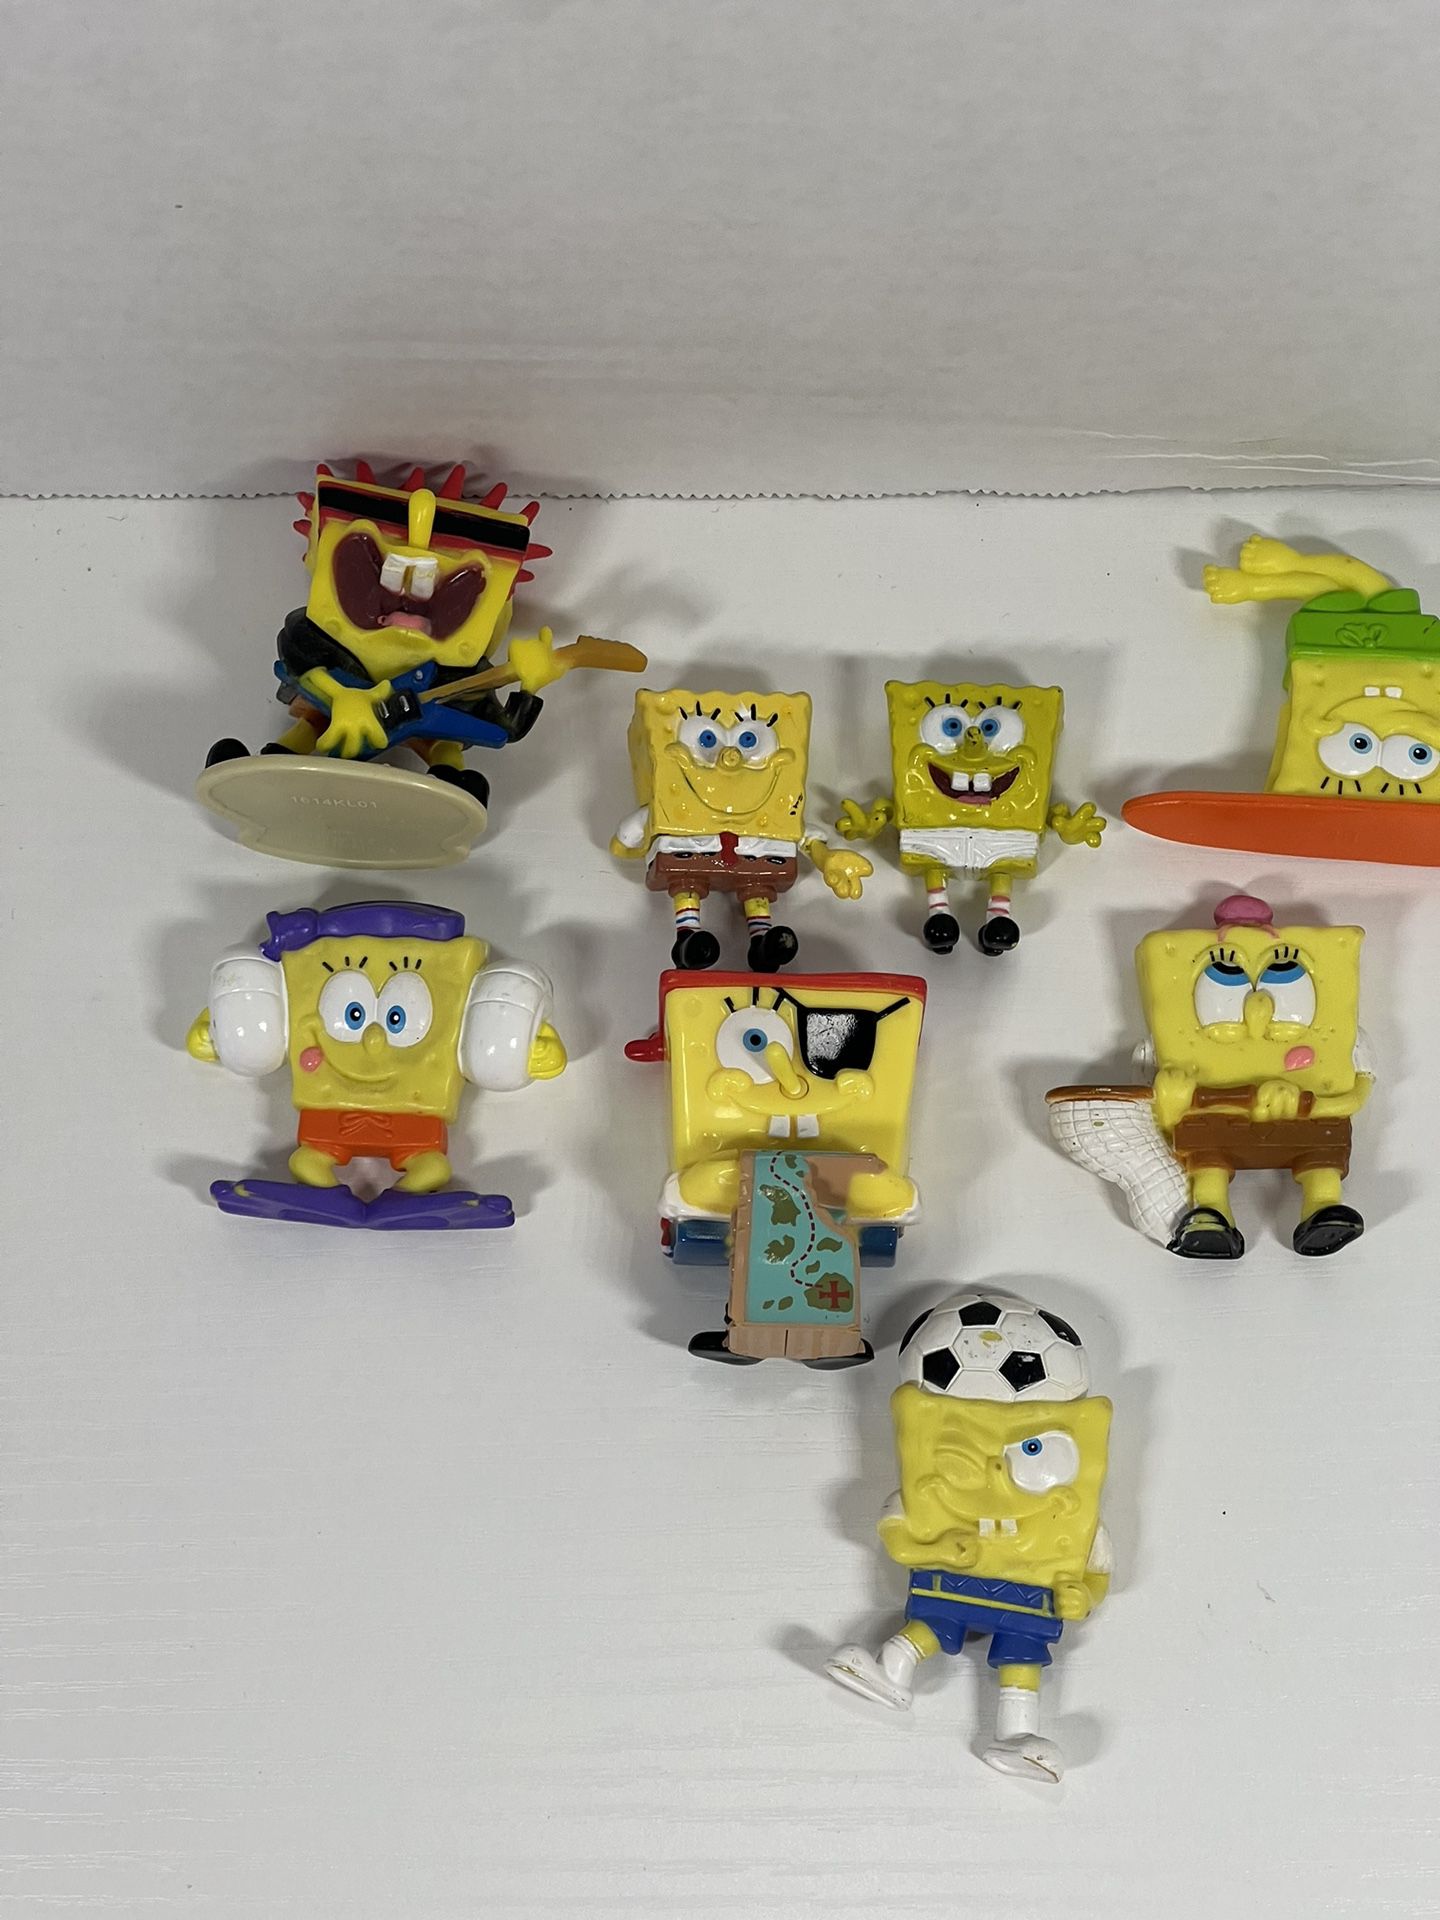 Spongebob Squarepants Toy Figures